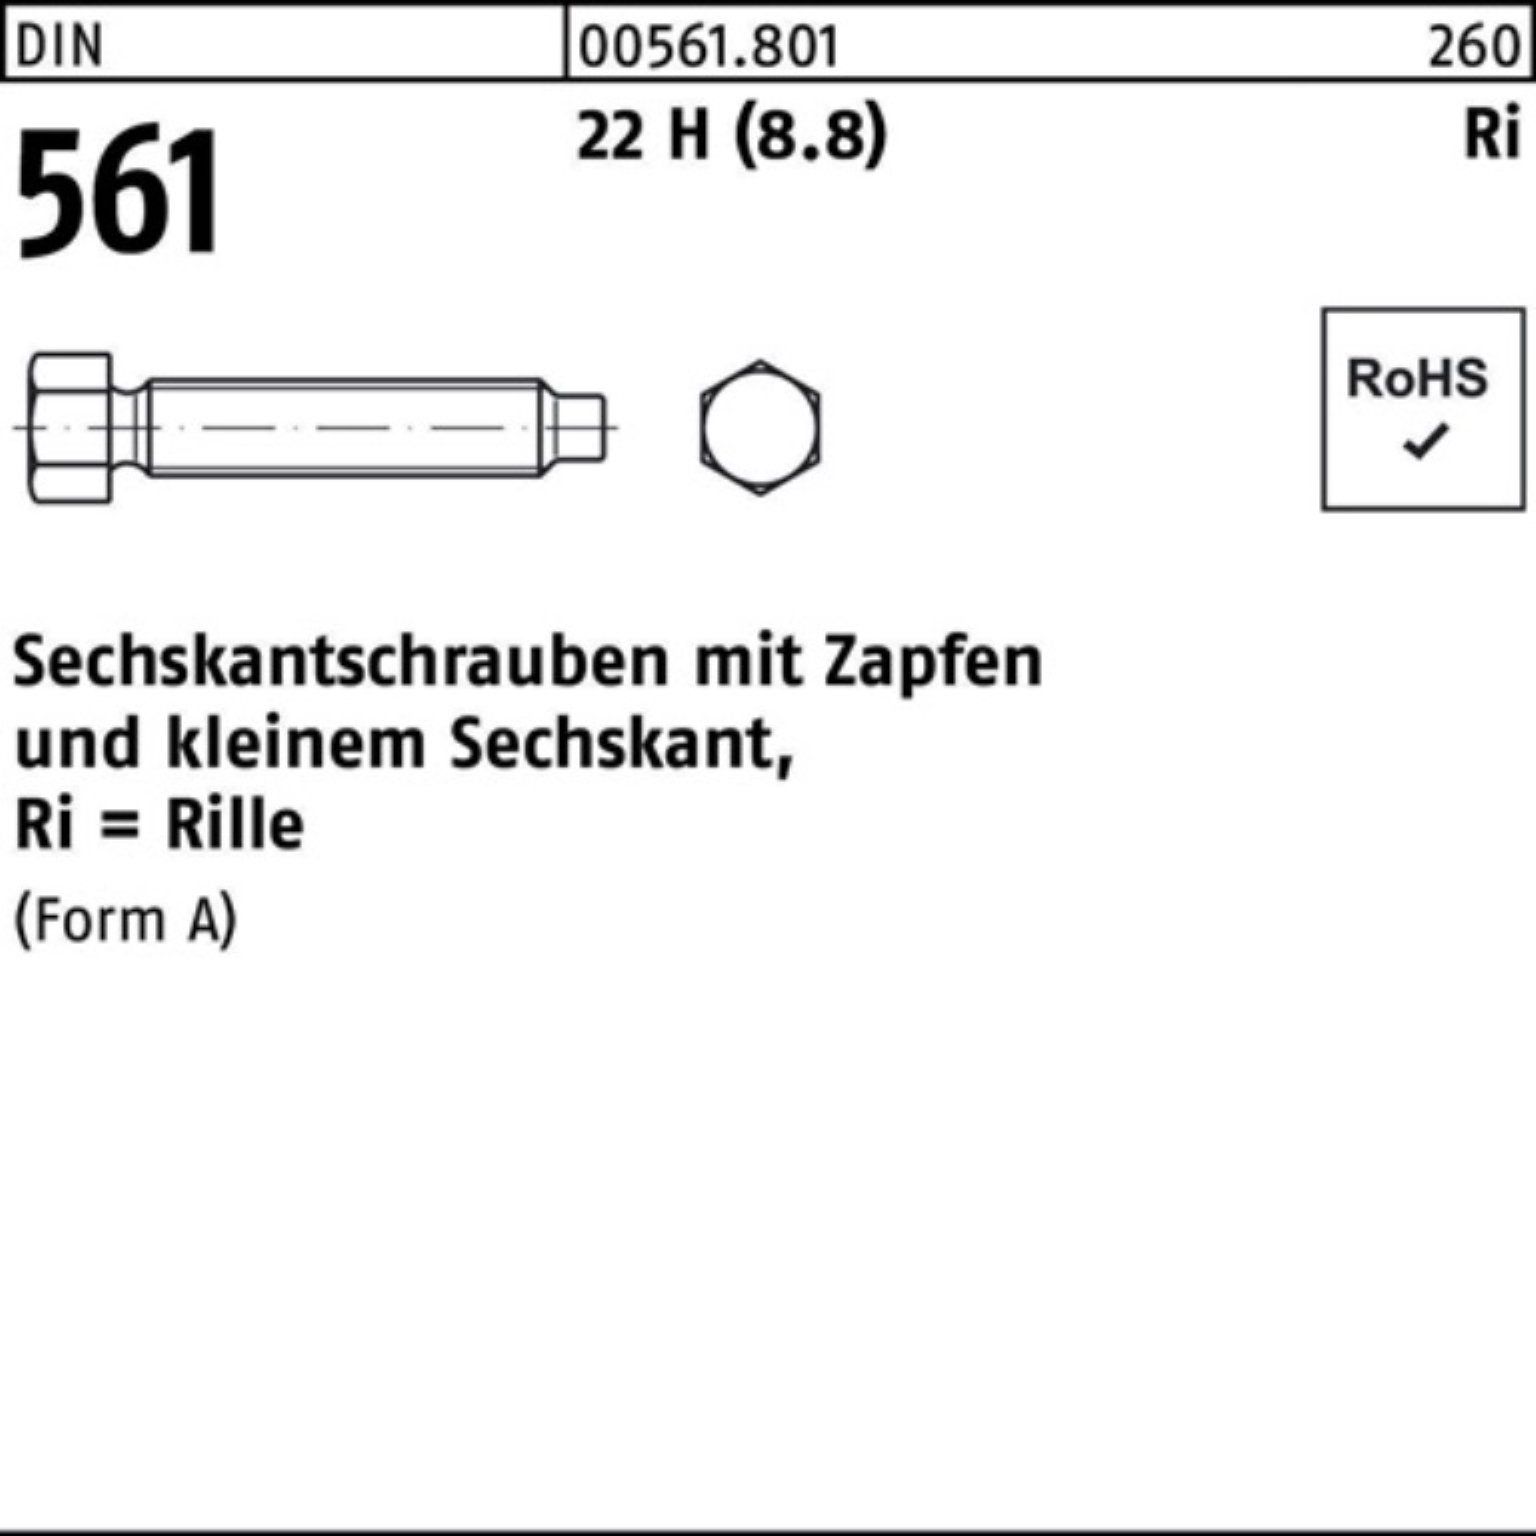 16x H DIN 25 Pack Zapfen Sechskantschraube St 561 Sechskantschraube Reyher (8.8) 100er 22 40 AM